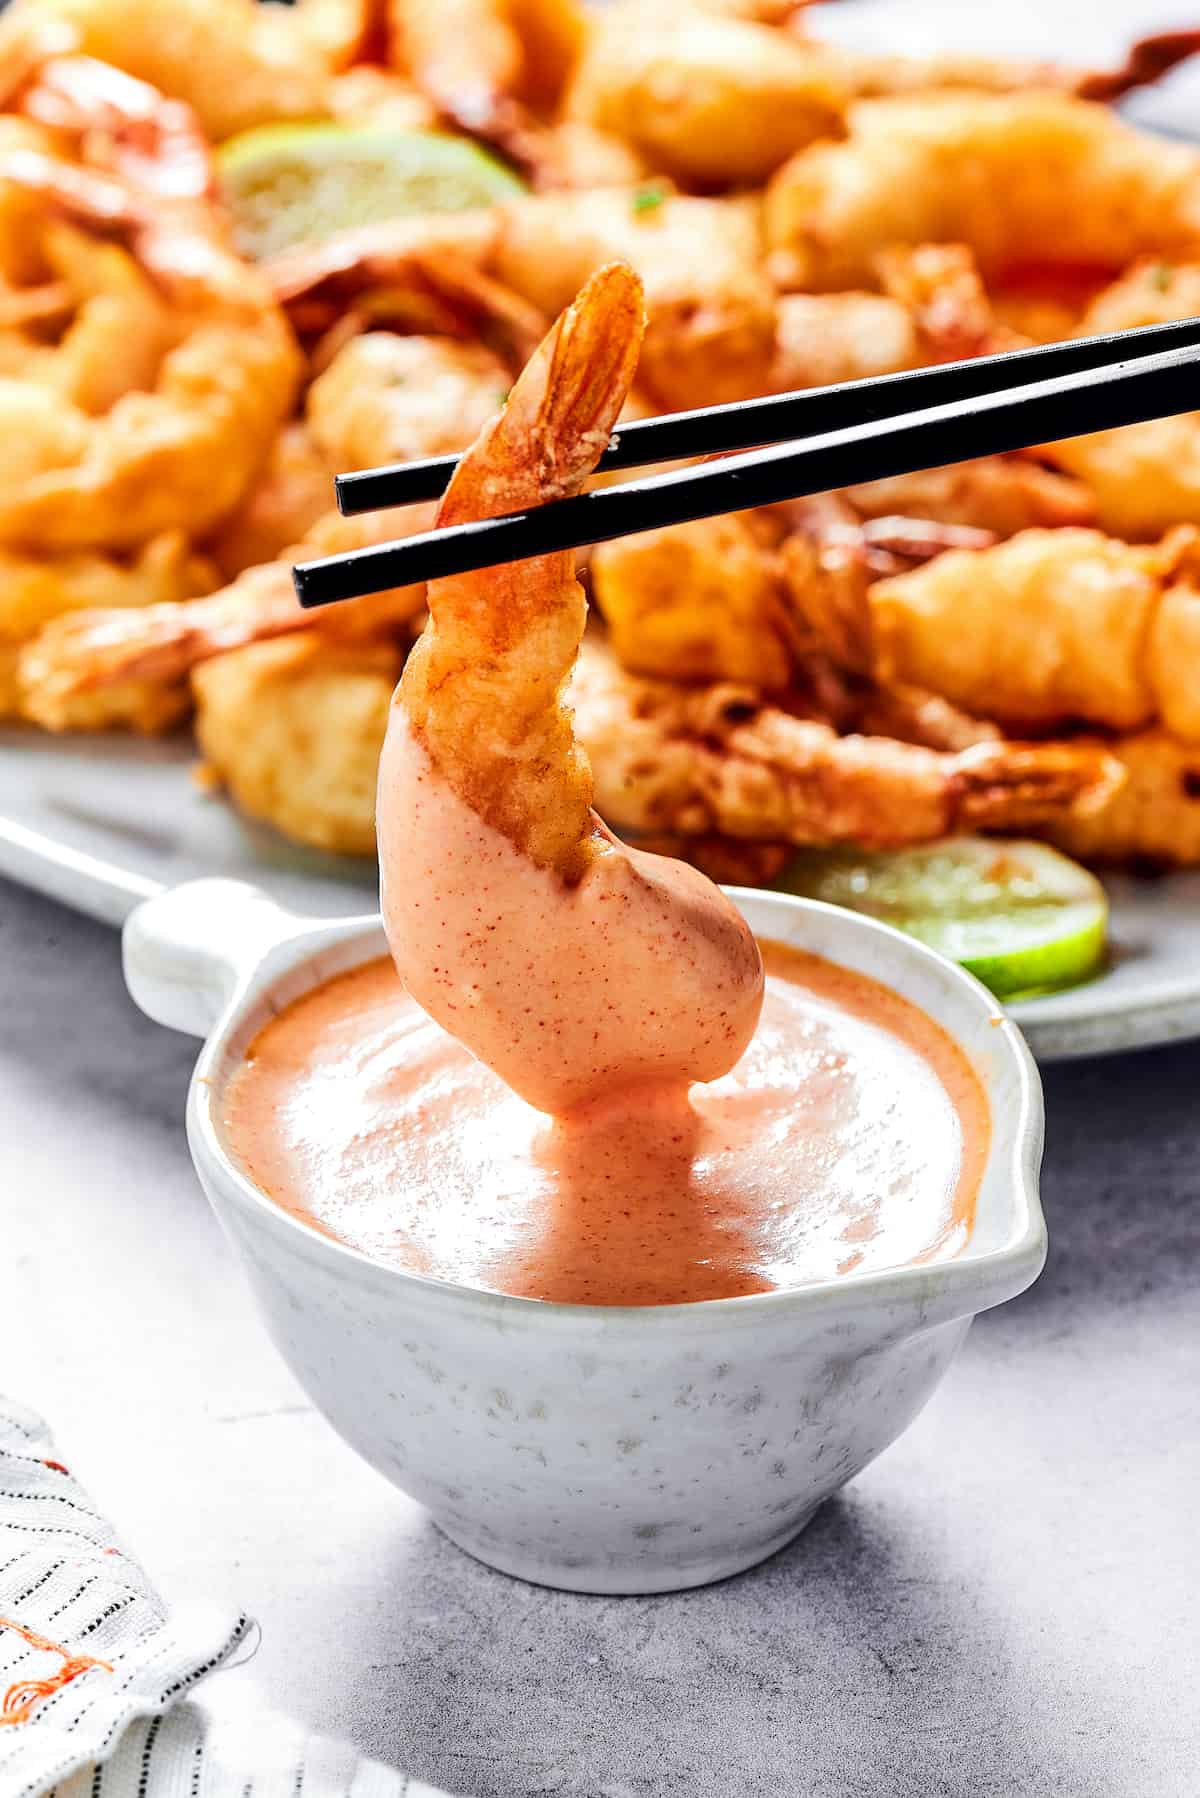 Chopsticks holding a fried shrimp in sauce